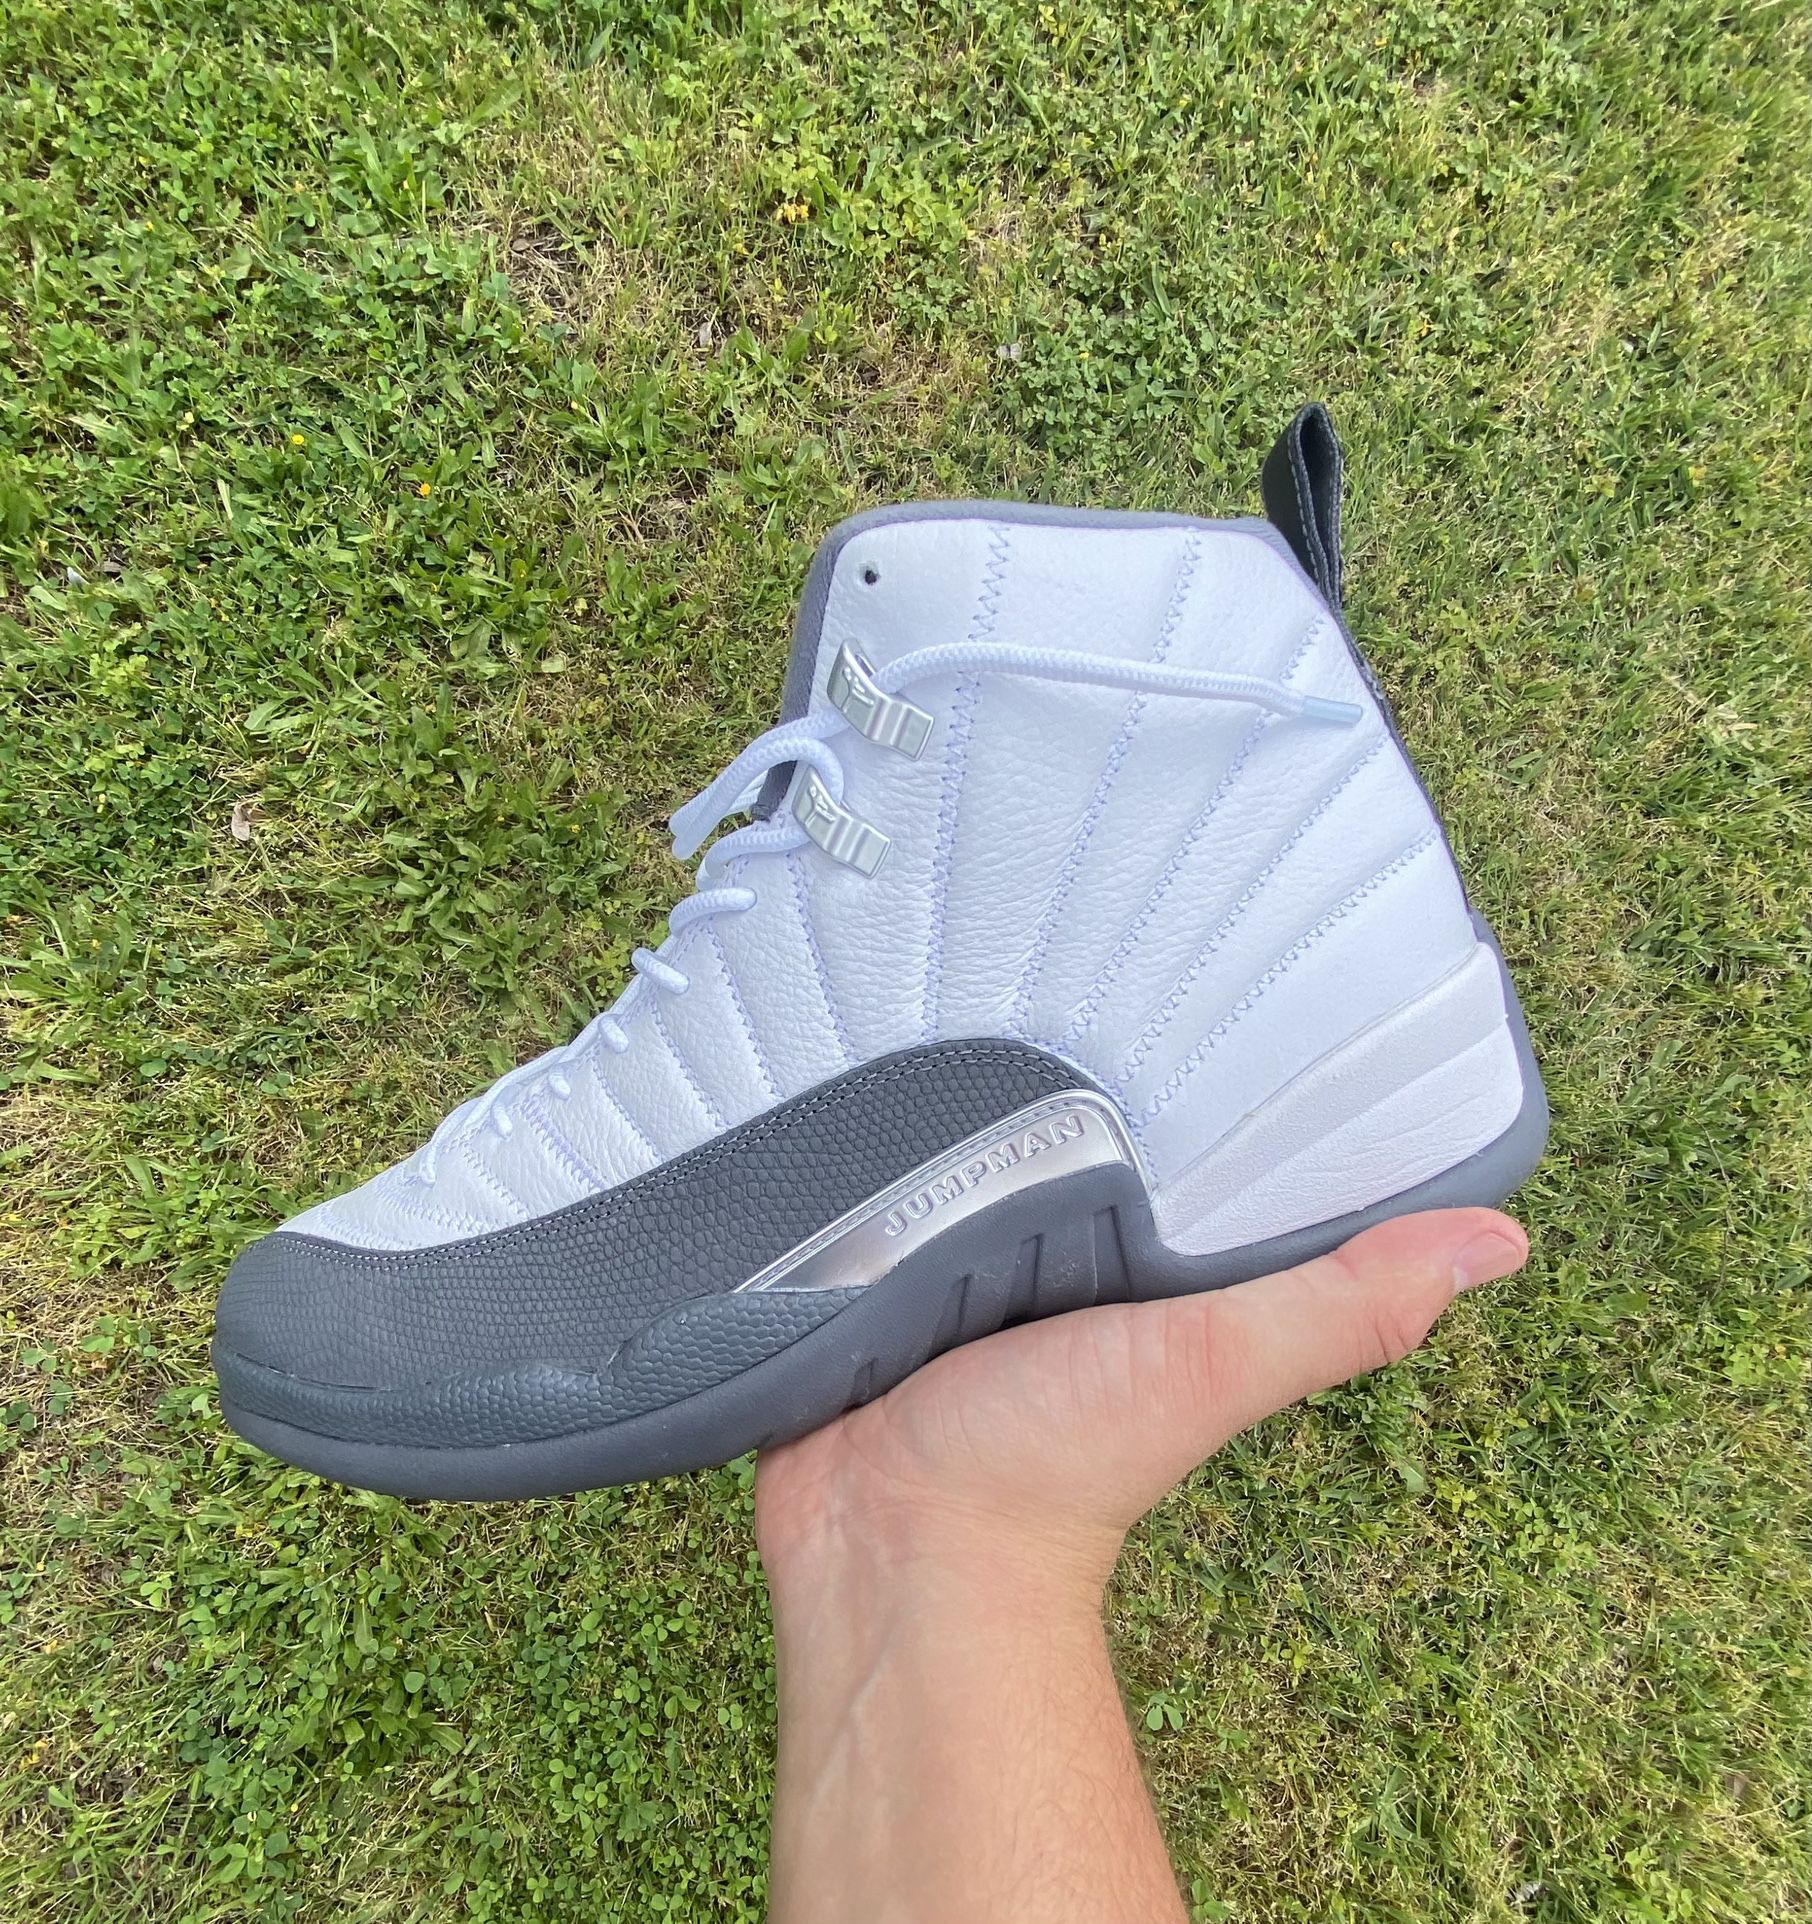 Jordan 12 White Dark Grey Size 13